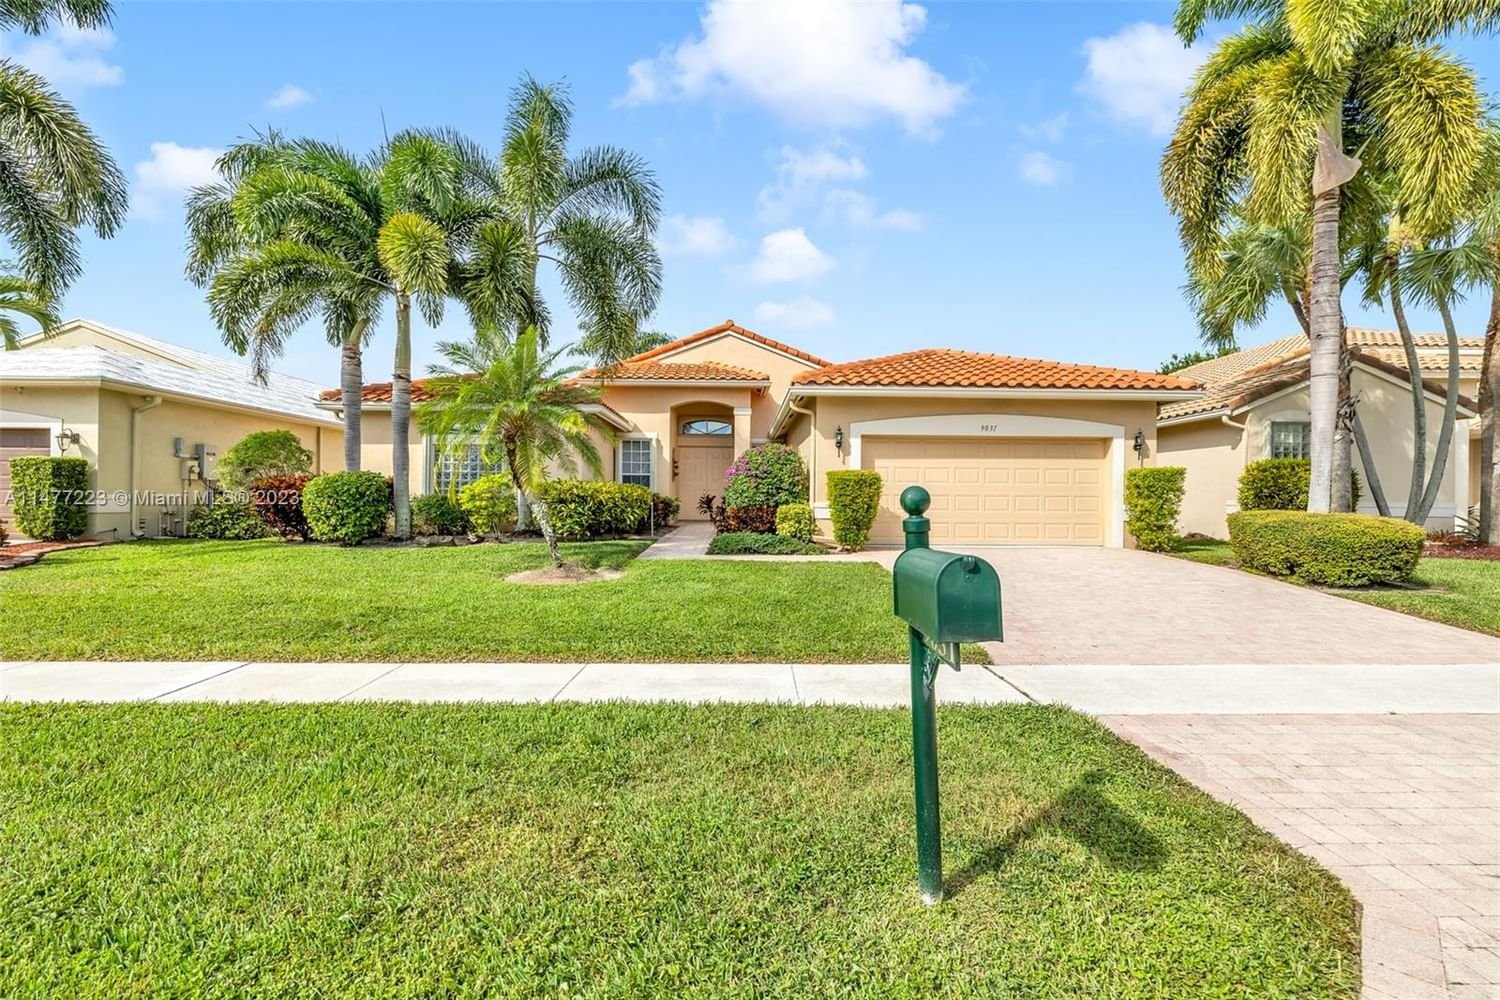 Real estate property located at 9031 Padova Dr, Palm Beach County, TUSCANY PAR D, Boynton Beach, FL